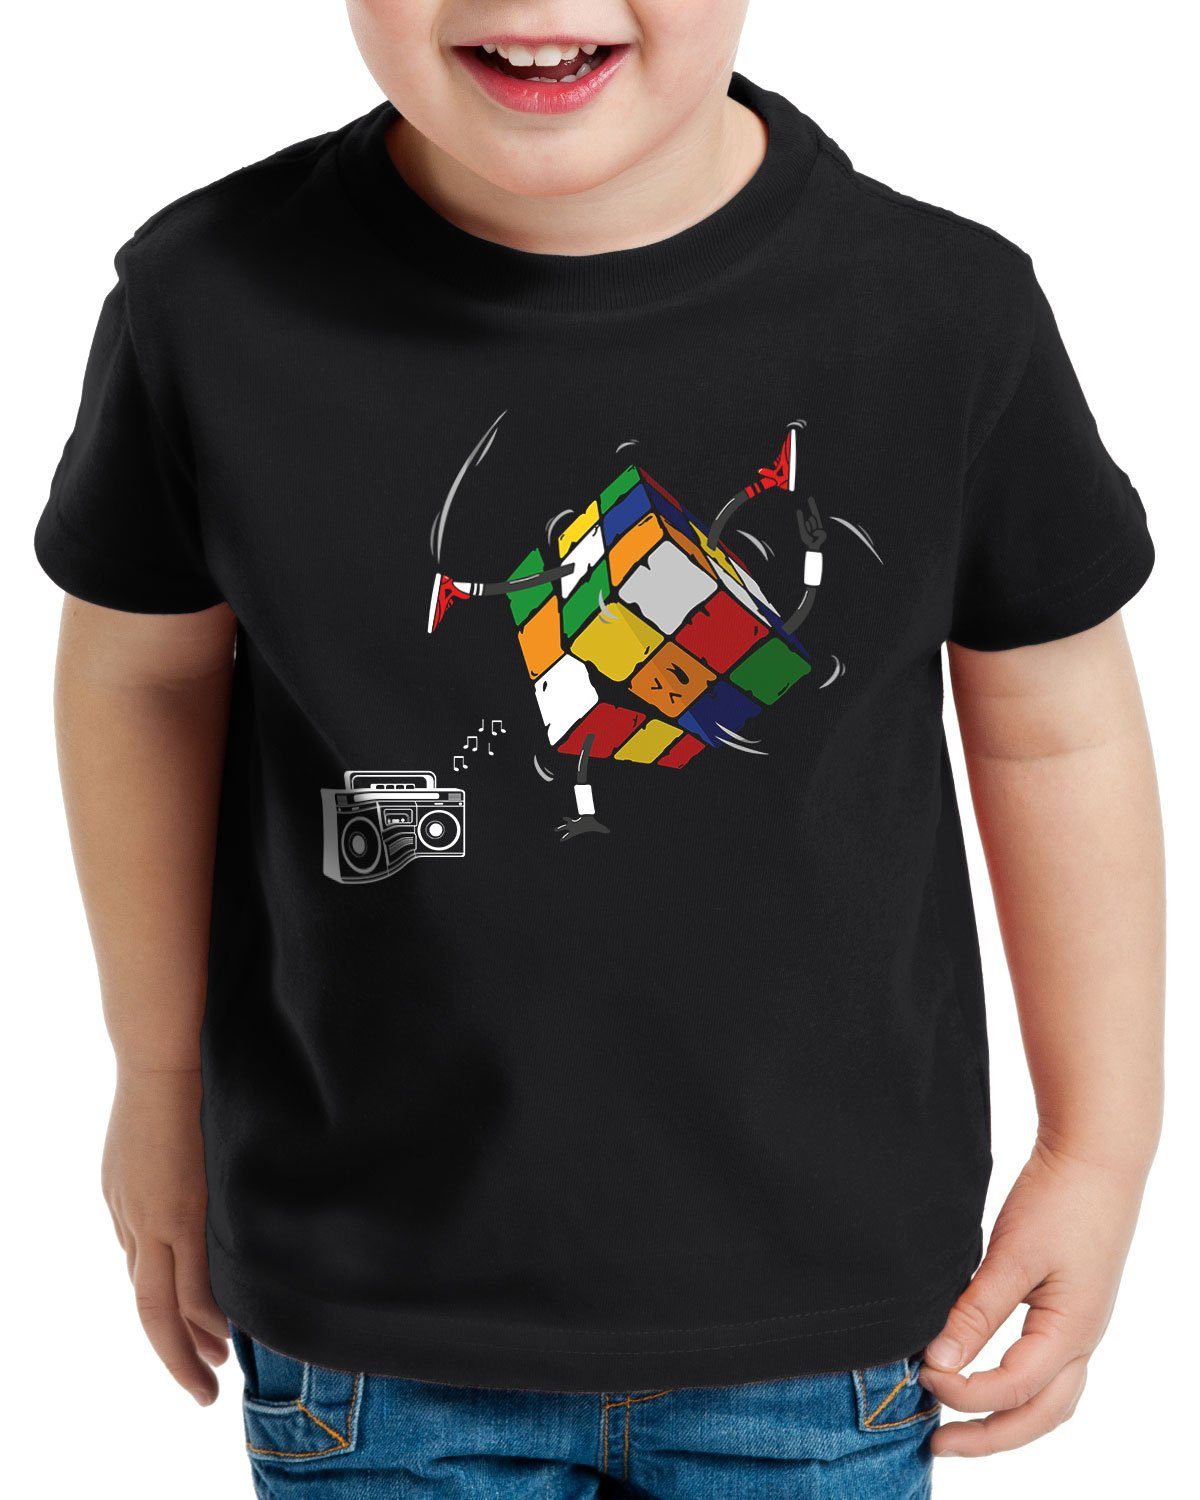 style3 Print-Shirt Kinder T-Shirt Cube sheldon zauberwürfel schwarz Breakdance